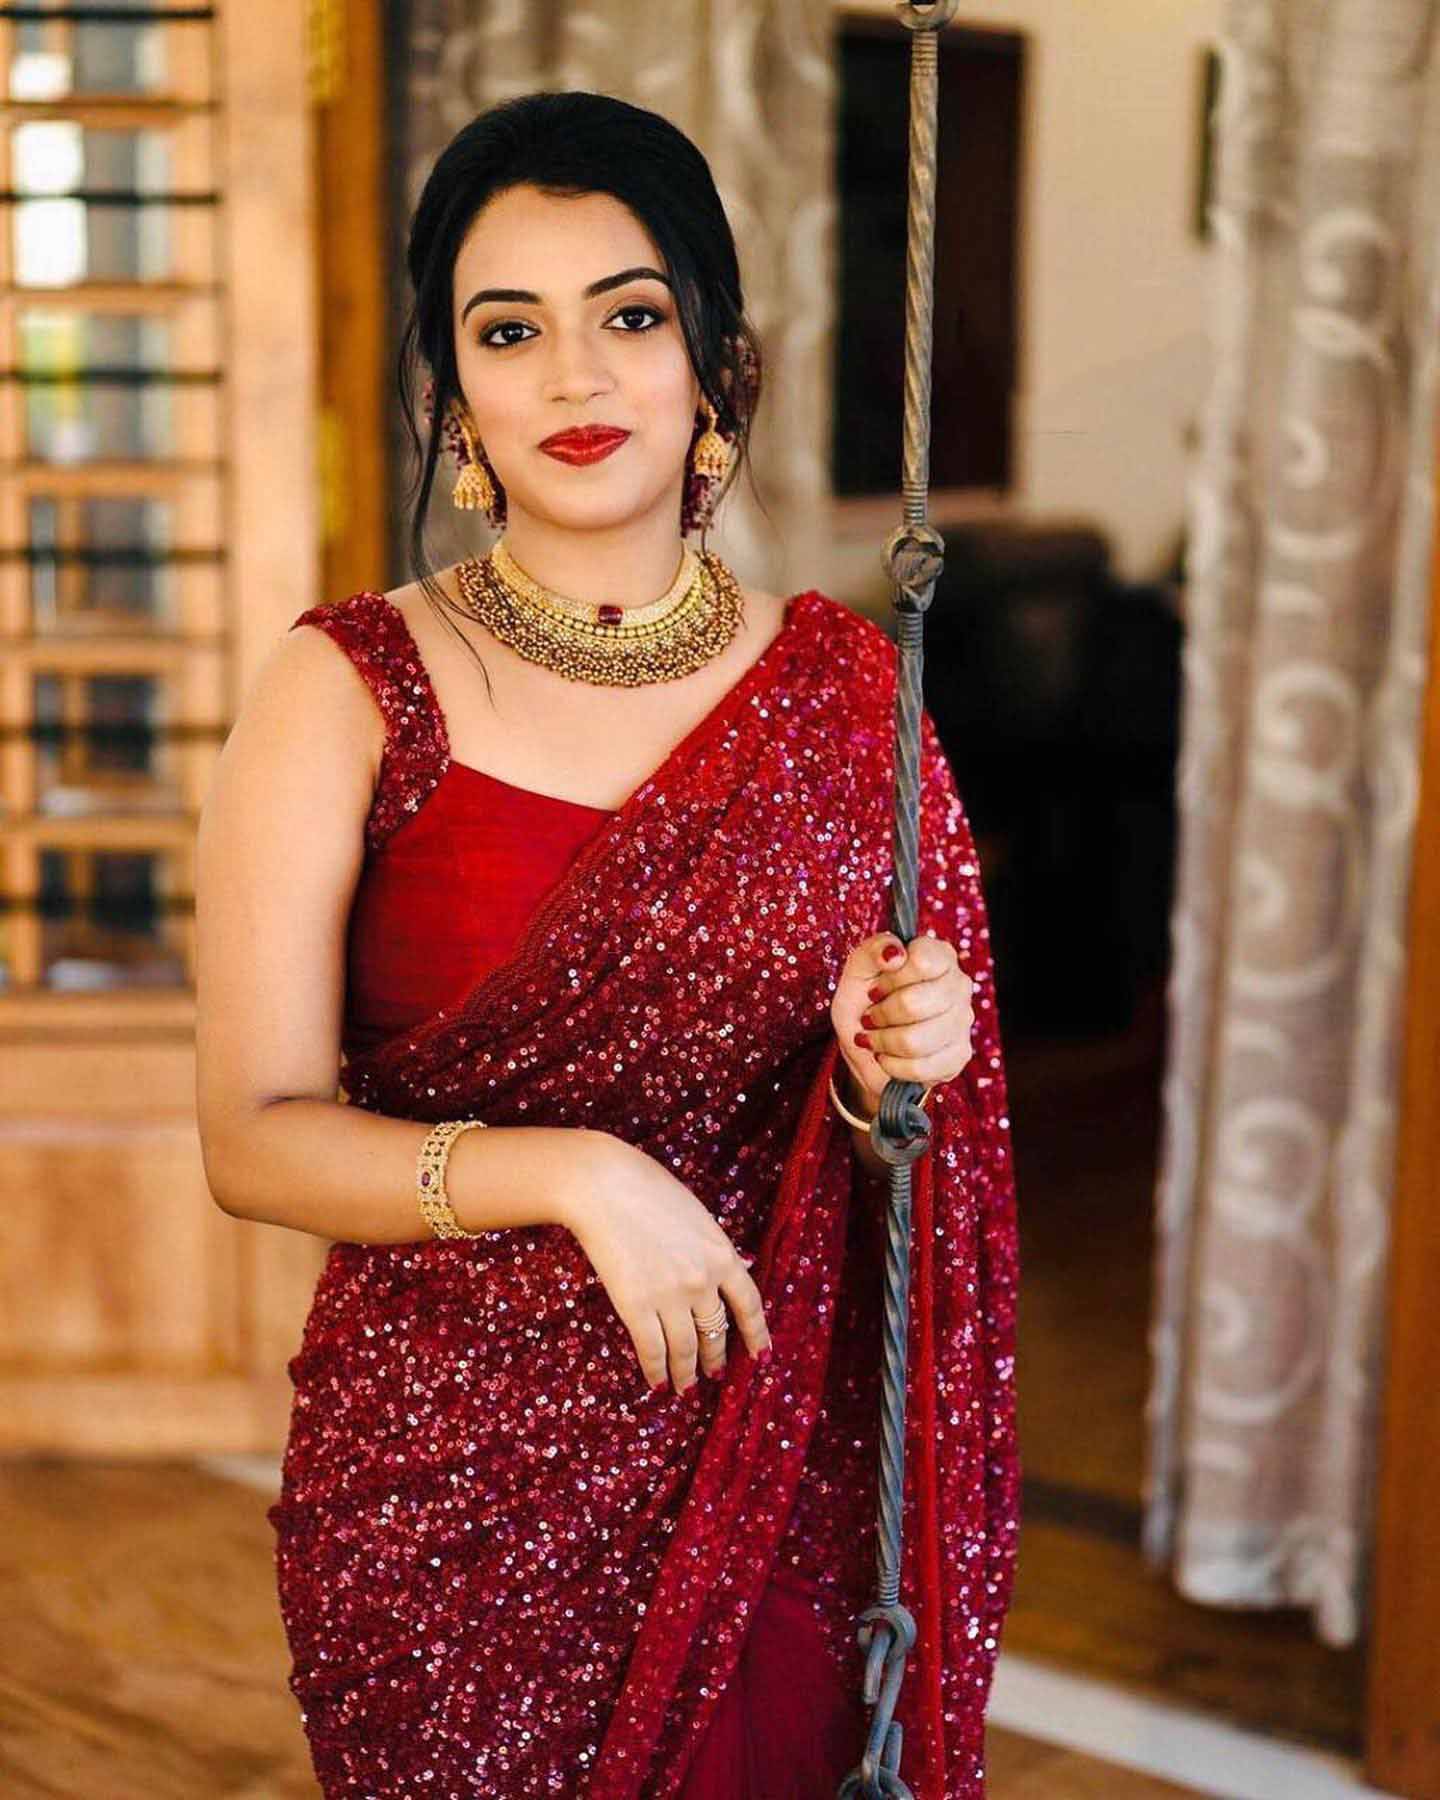 Red Color Vichitra Silk Party Wear Saree